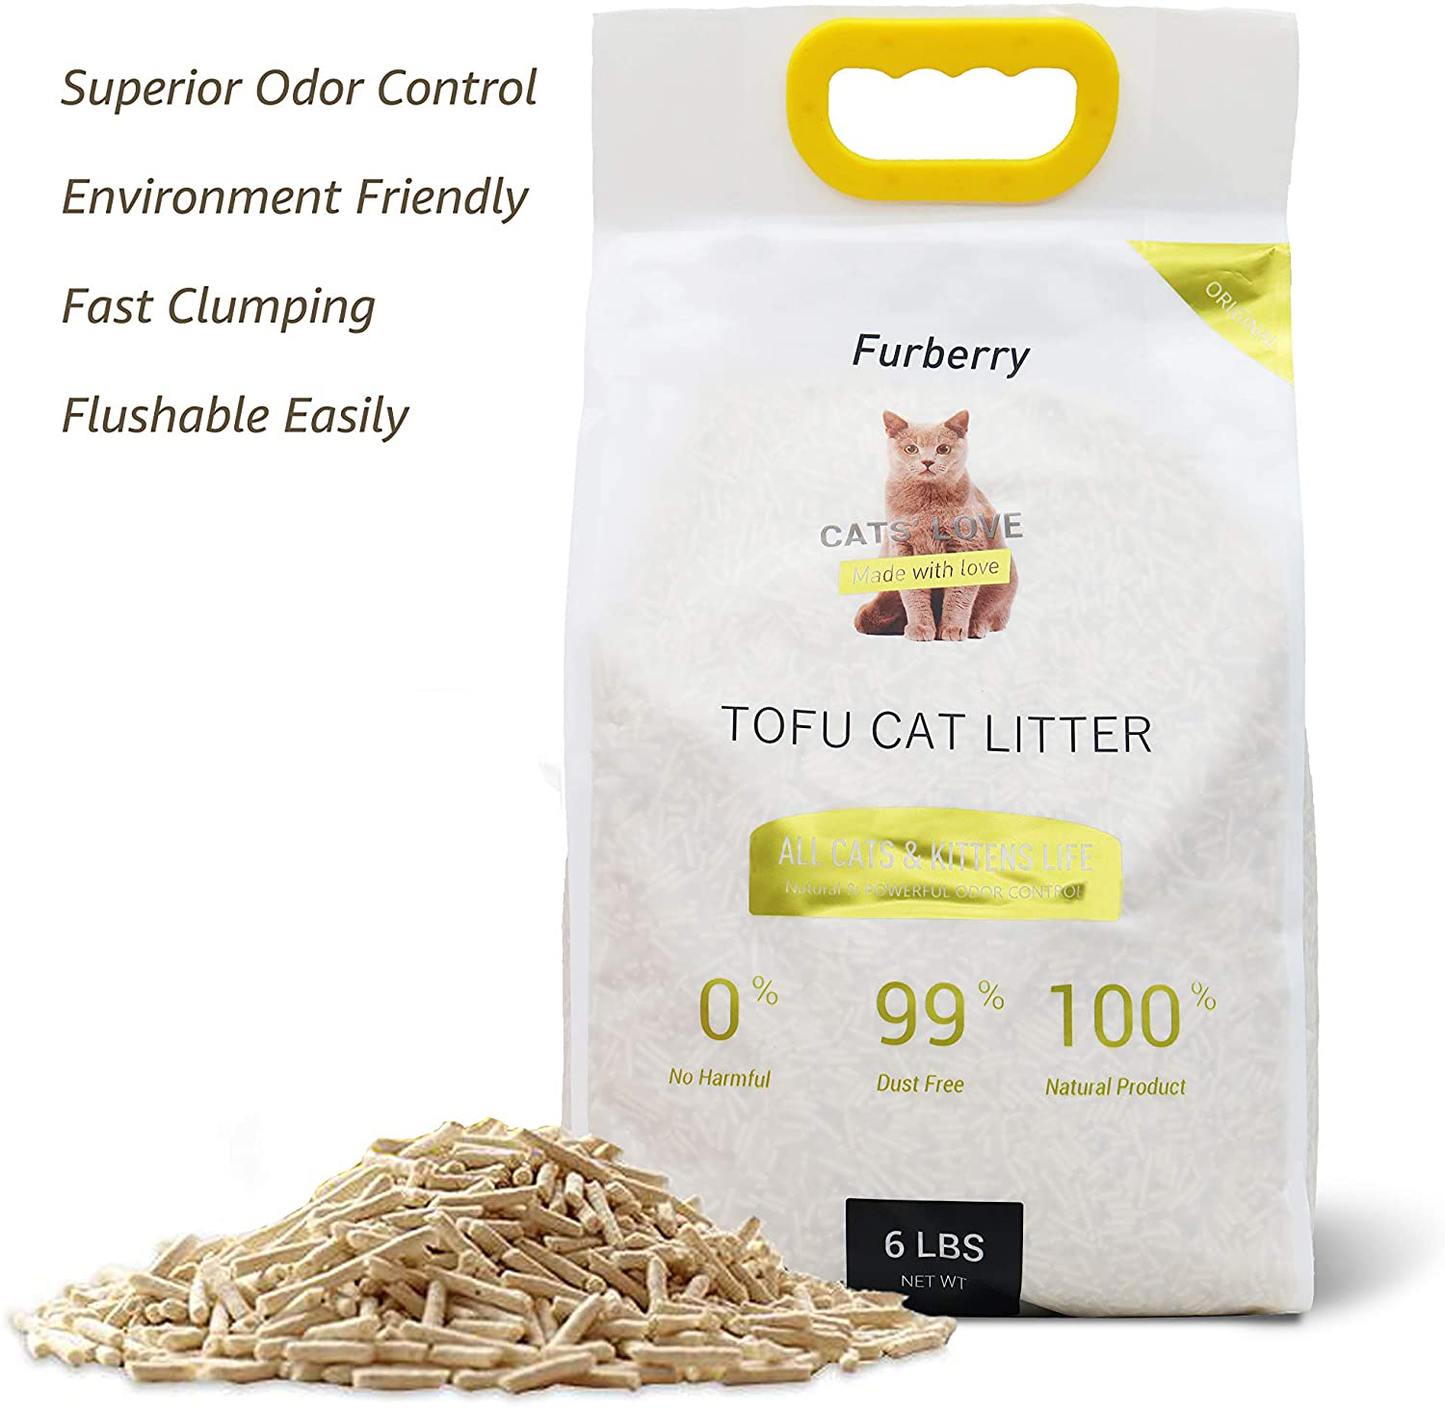 Furberry Clumping Cat Litter Tofu Natural Cat Litter Unscented, Pack of 2, 12Lb. Animals & Pet Supplies > Pet Supplies > Cat Supplies > Cat Litter Furberry   